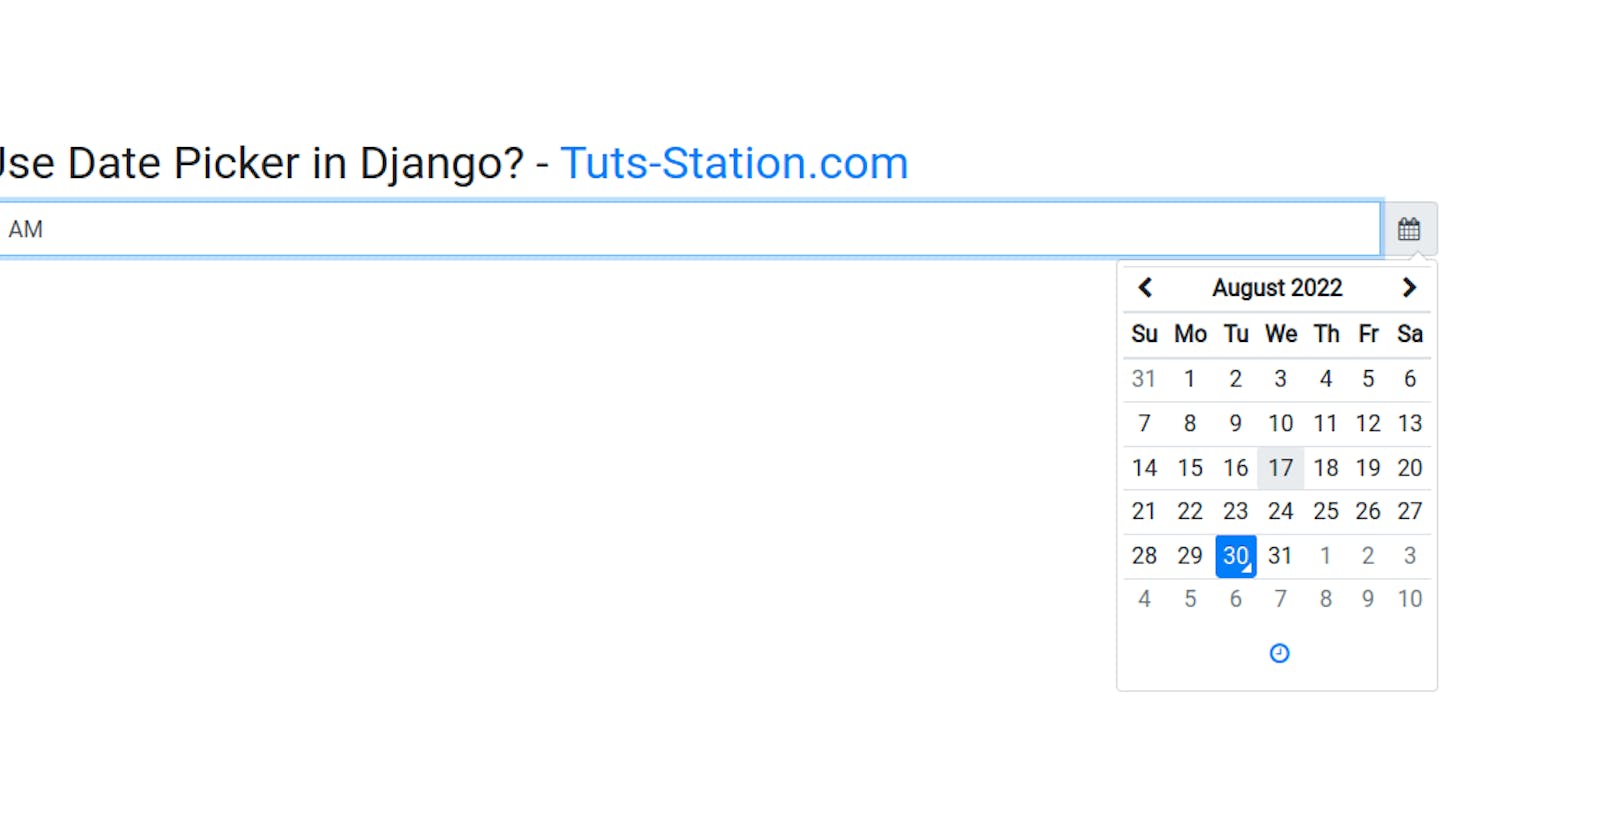 How to use Datepicker in Django?